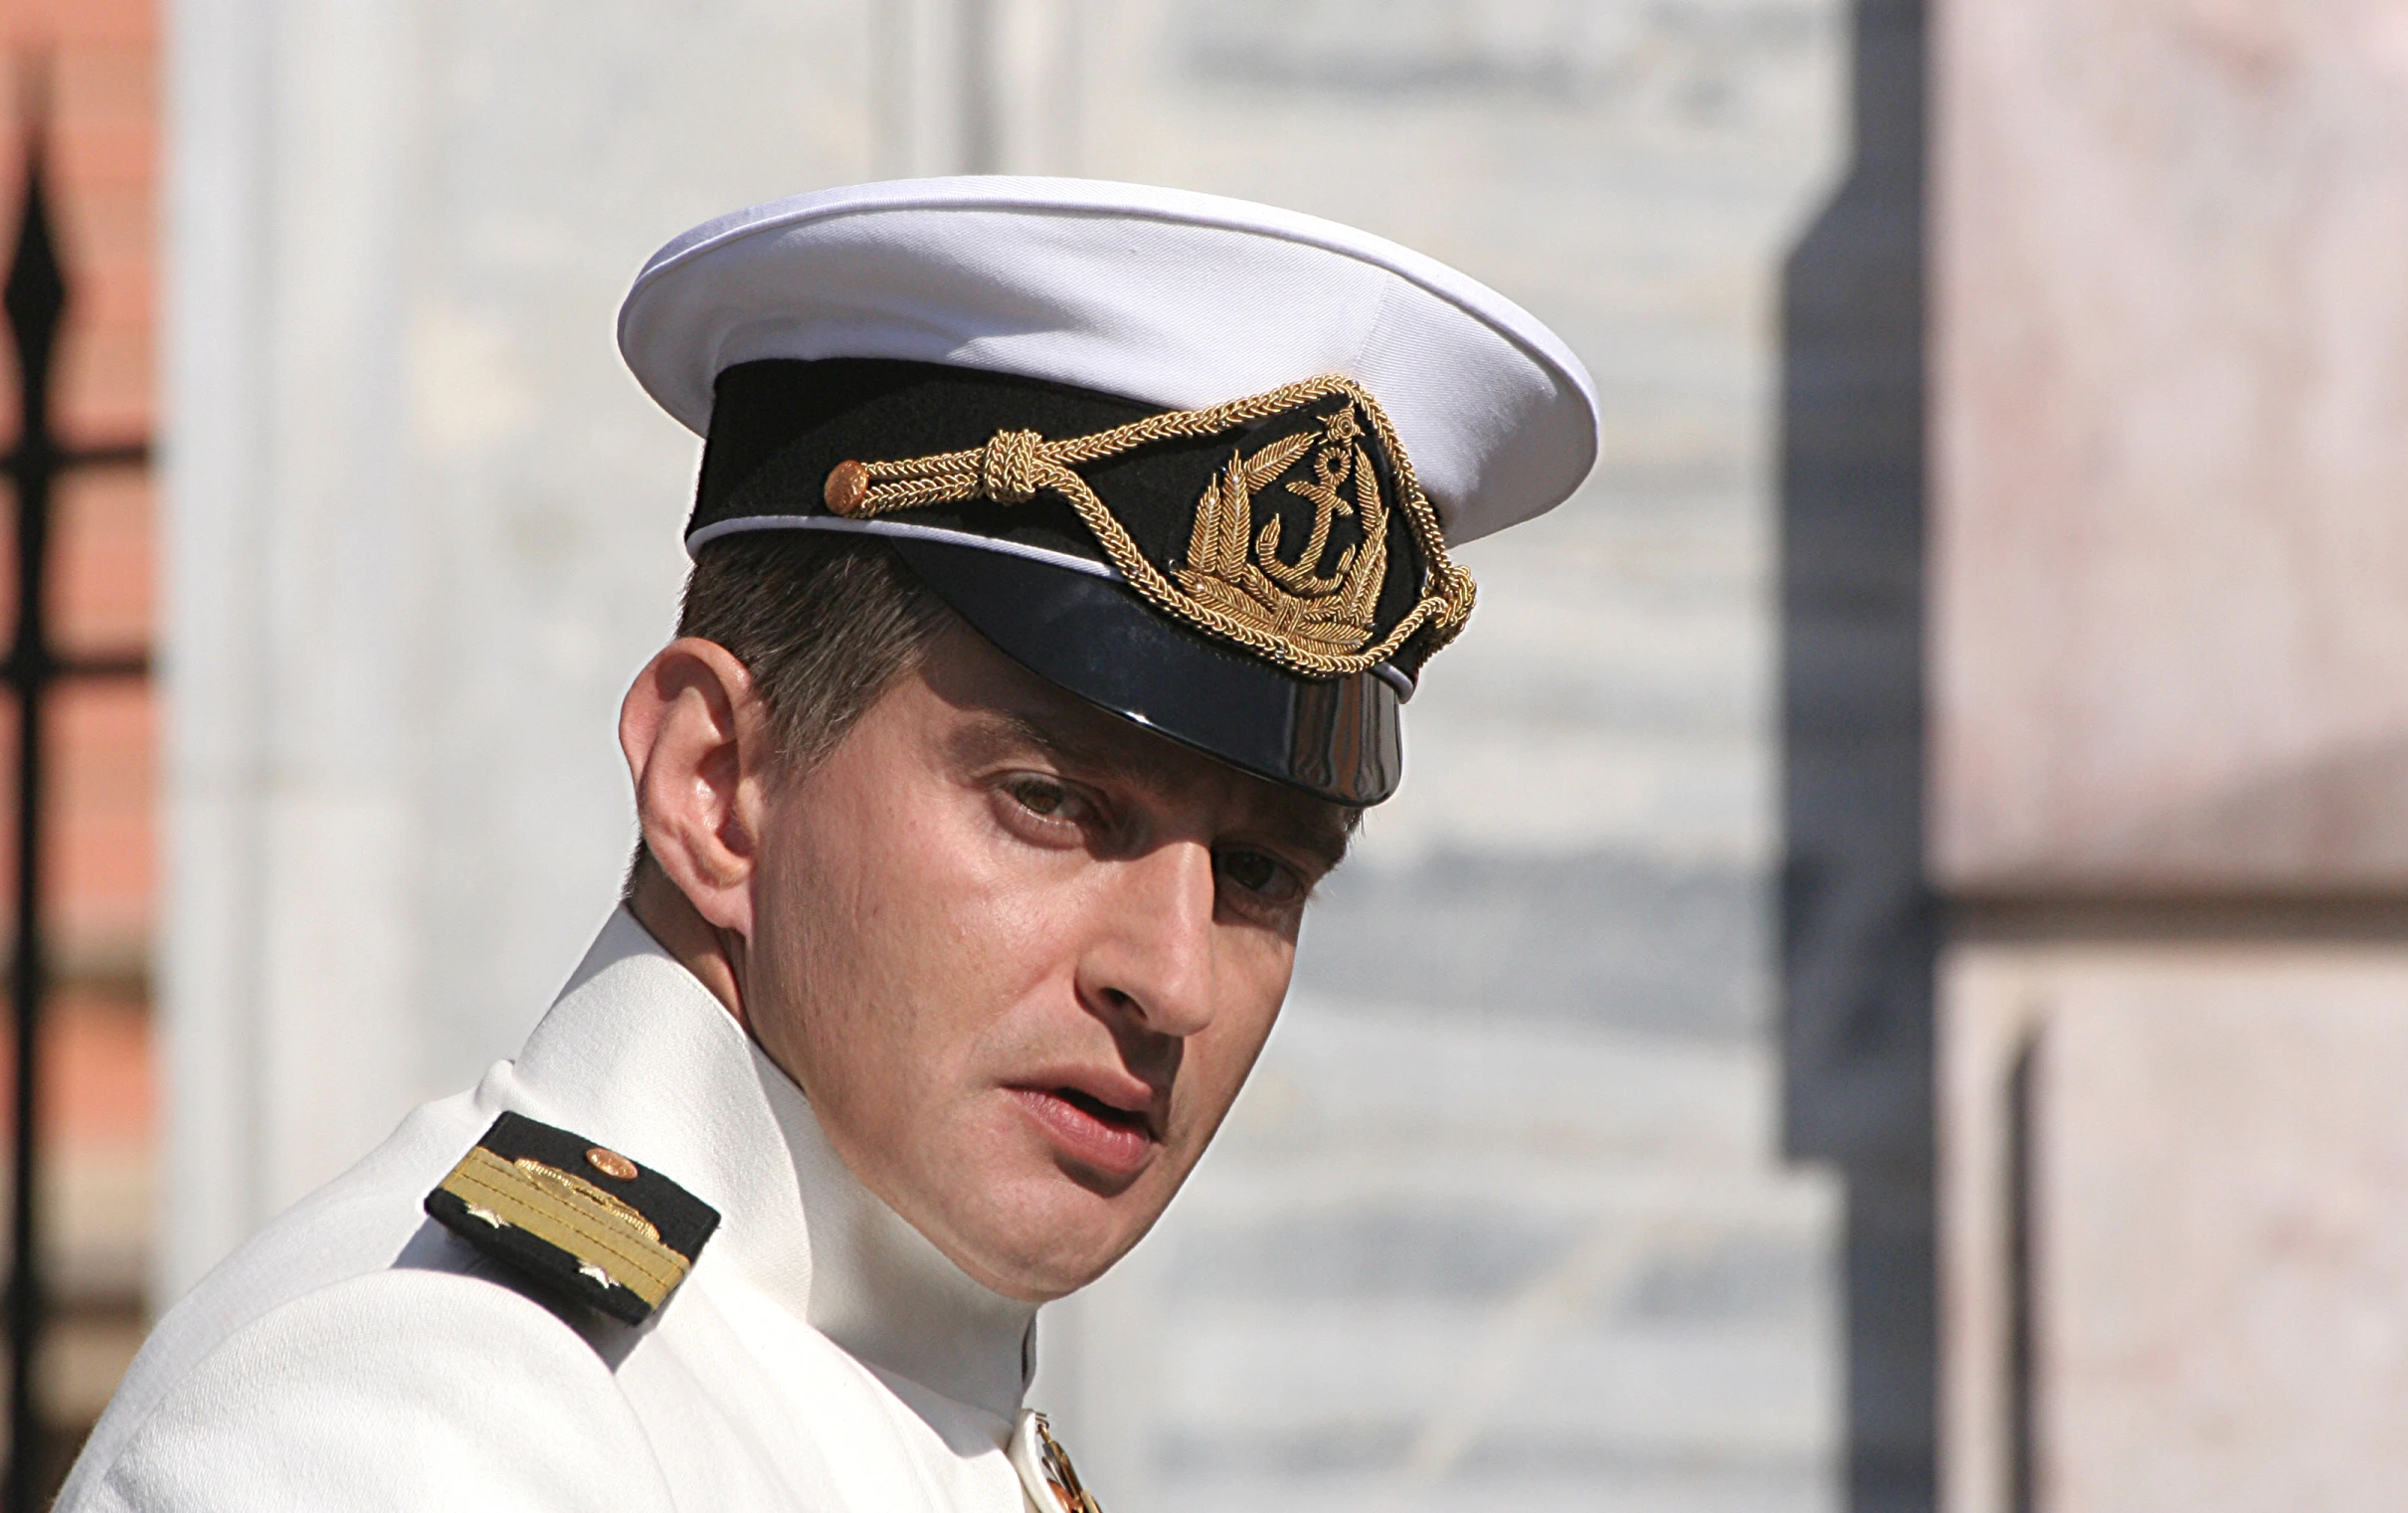 a military man wearing a white dress uniform with a black cap